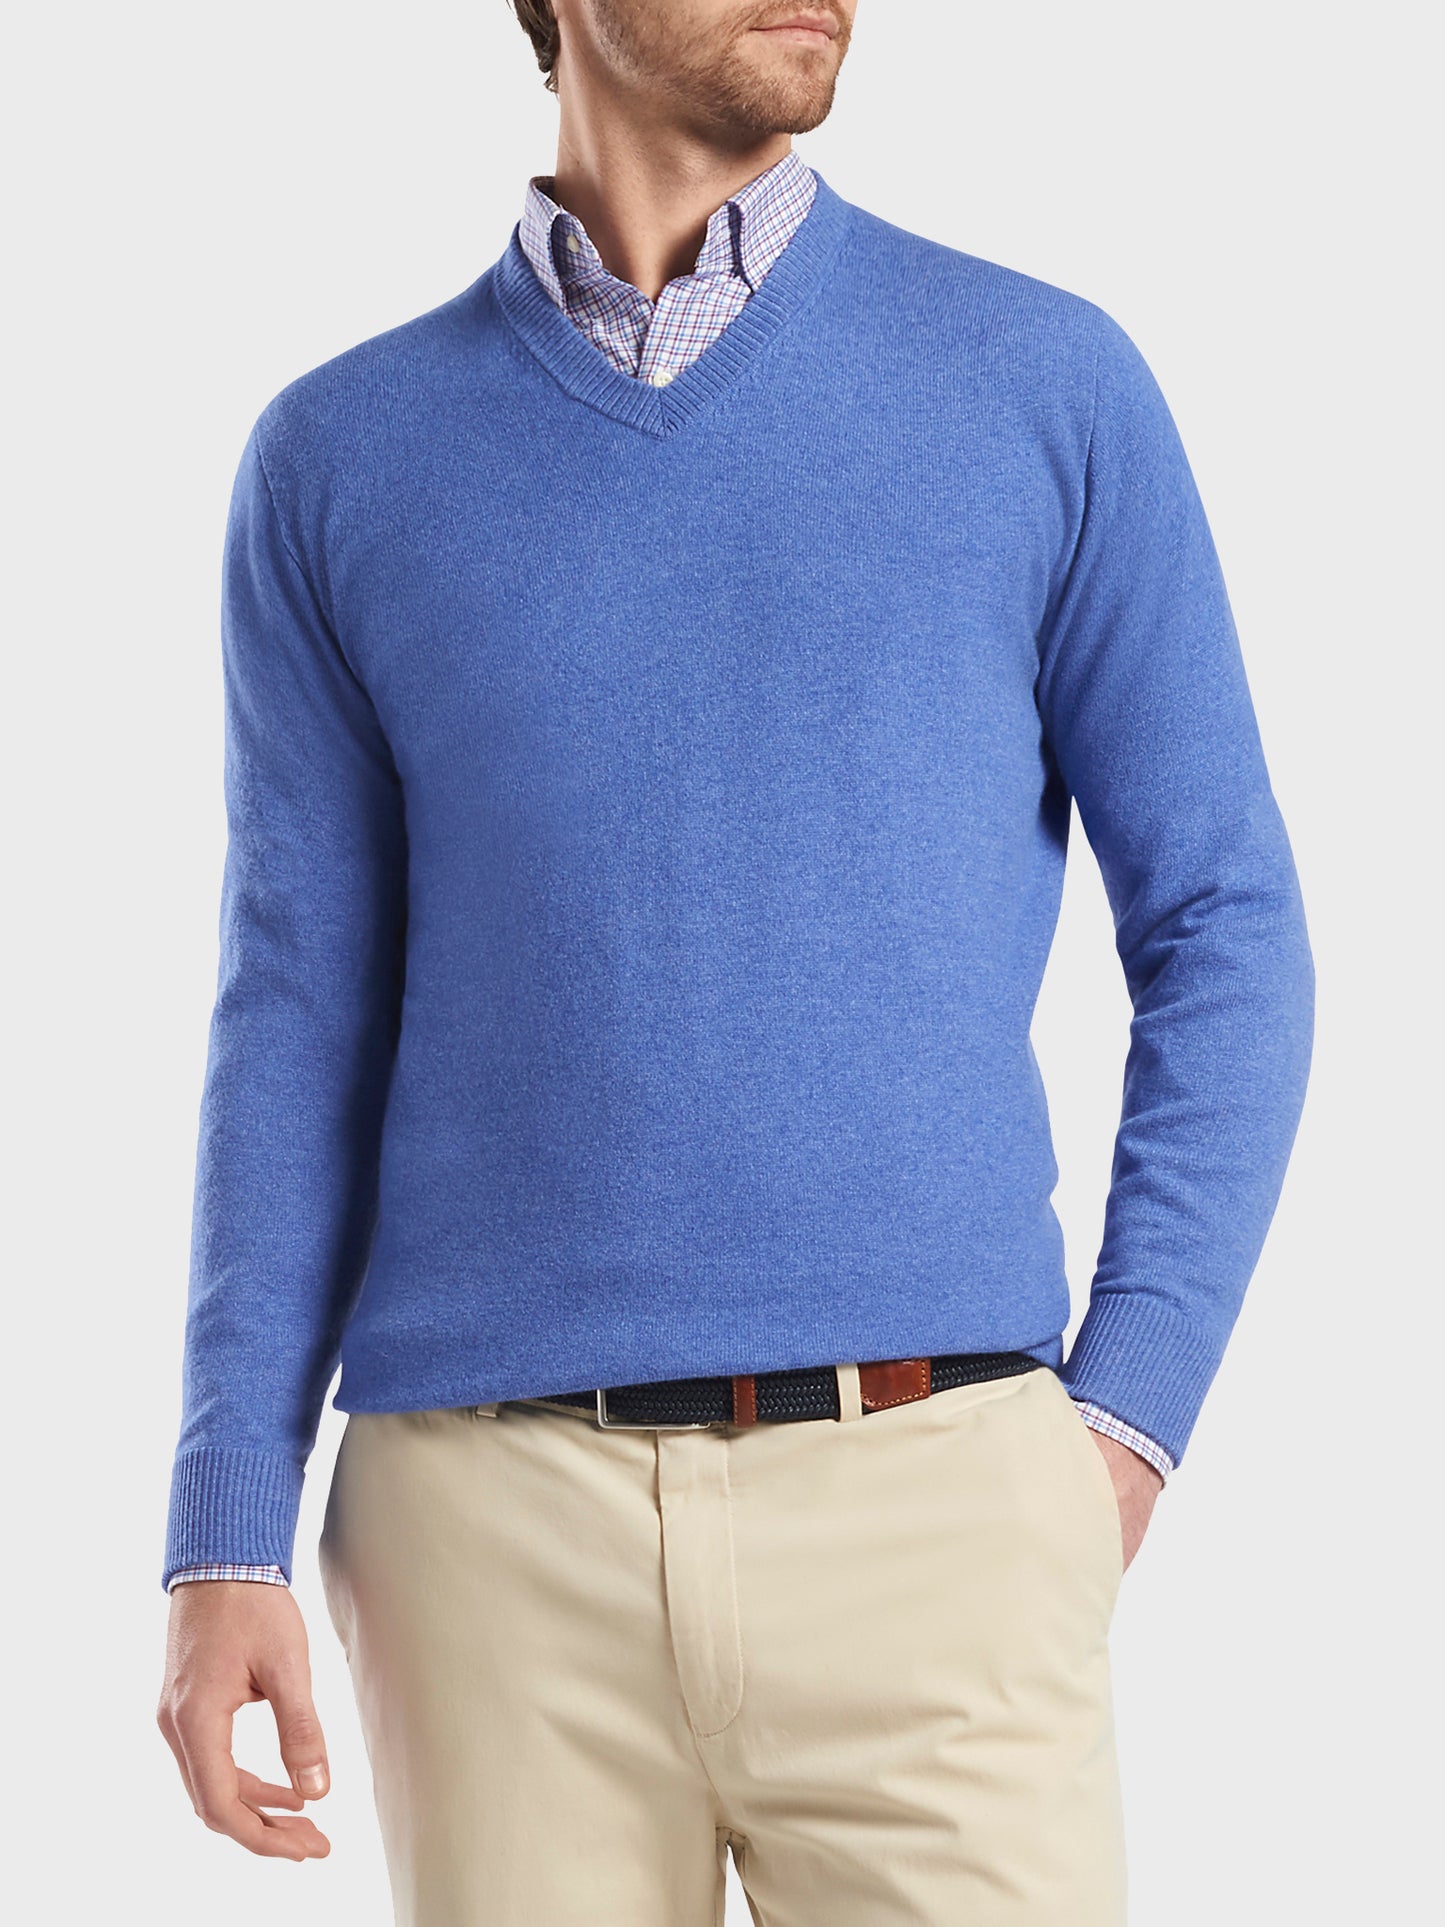 Peter Millar Crown Men's Crown Soft Cashmere V-Neck Sweater